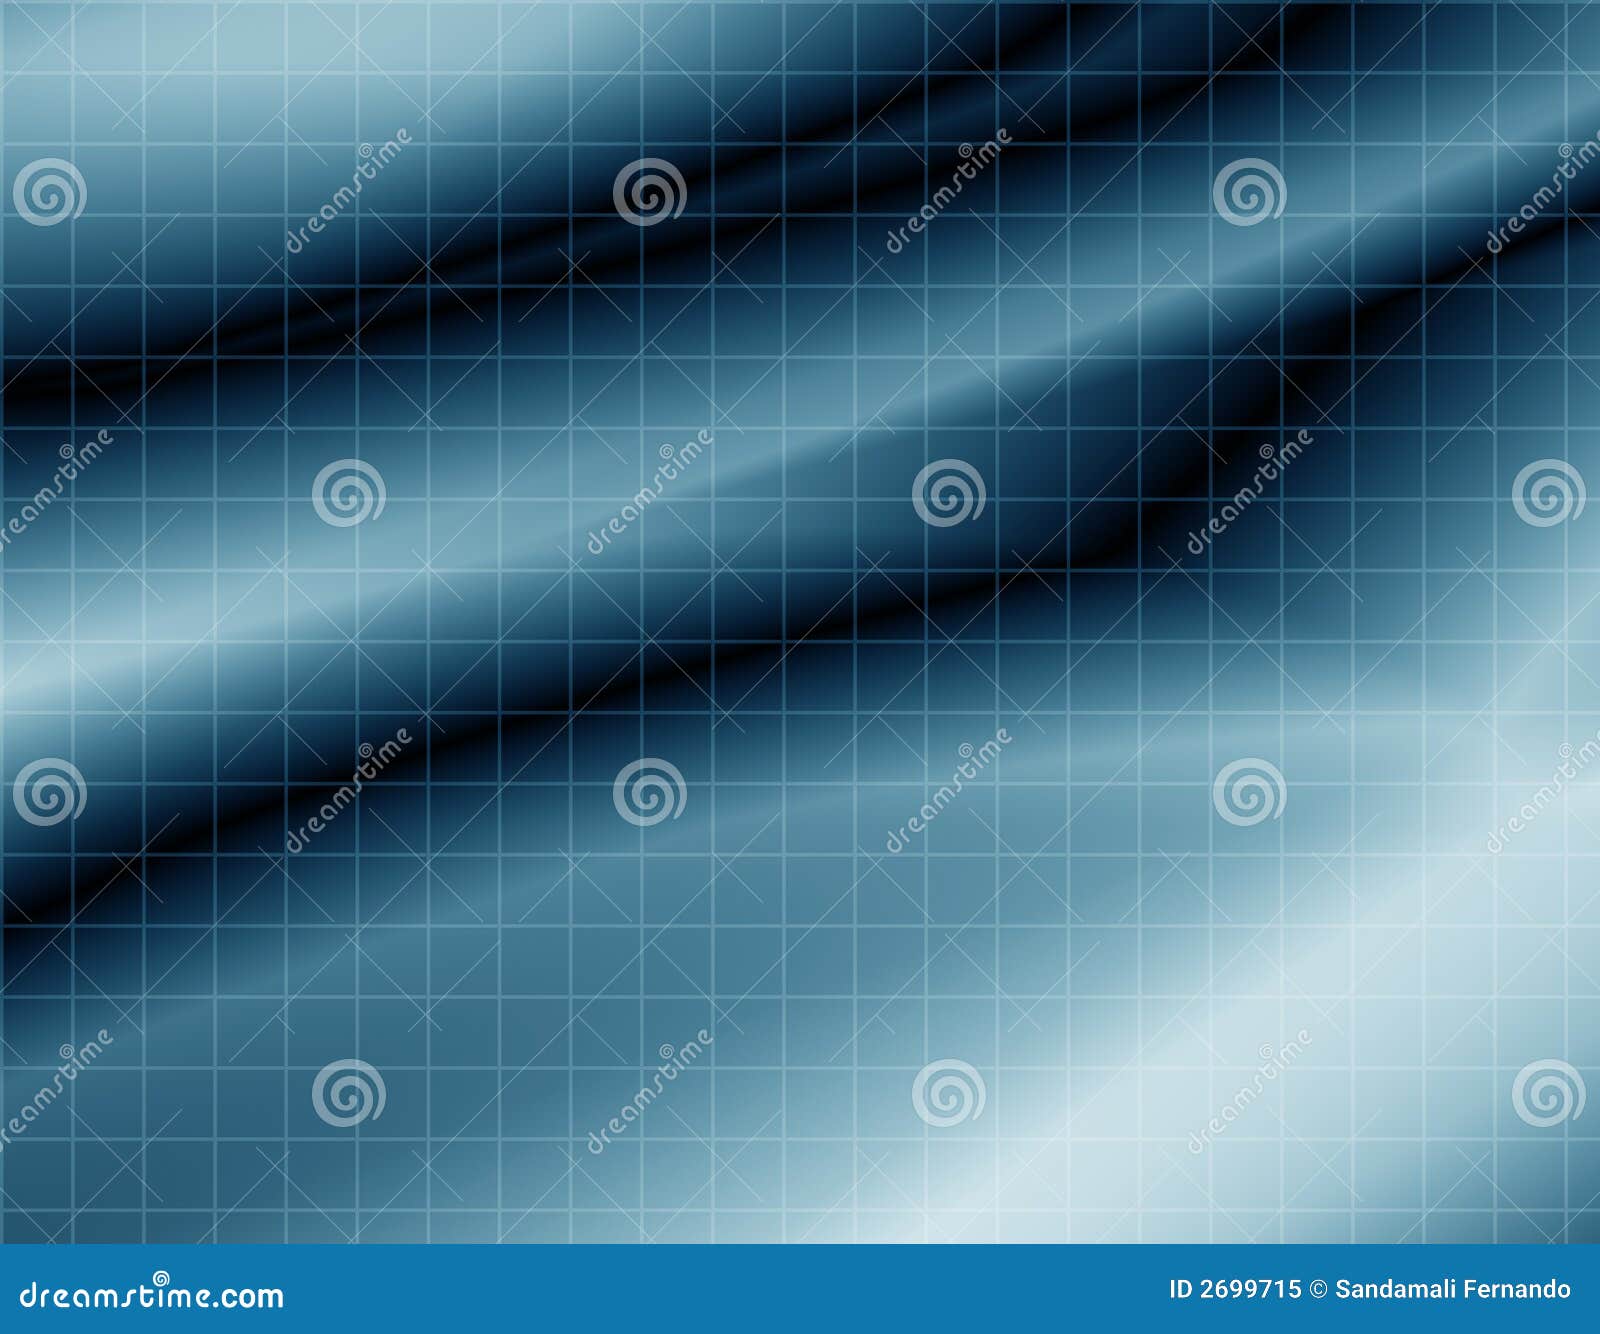 Grid Web Background Wallpaper Stock Illustration ...